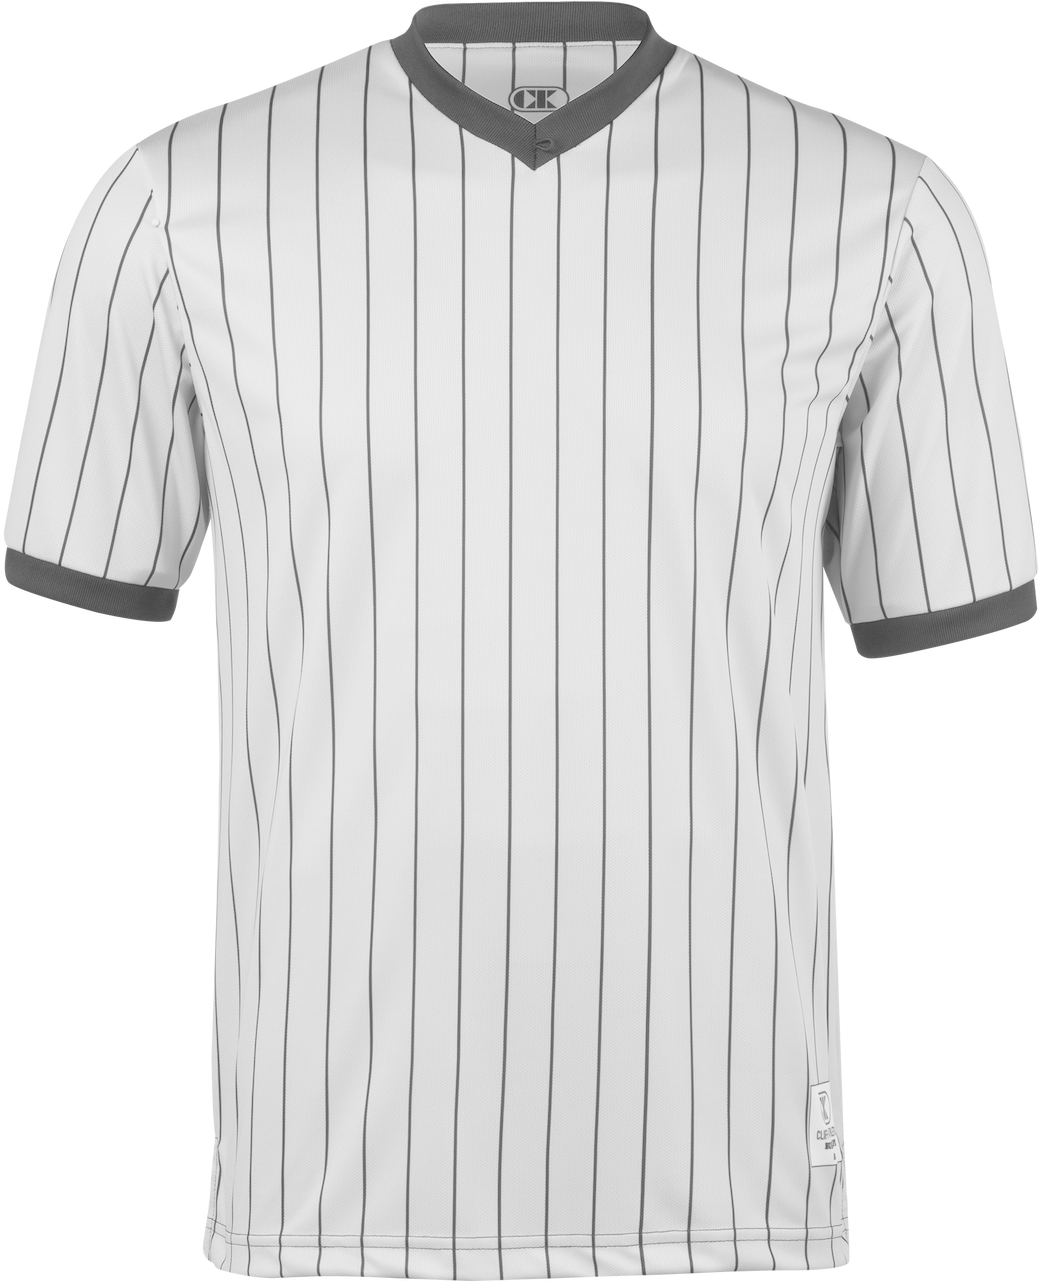 Cliff Keen Grey Ultra Mesh Referee Shirt - Baseball Uniform Clipart (1280x1280), Png Download